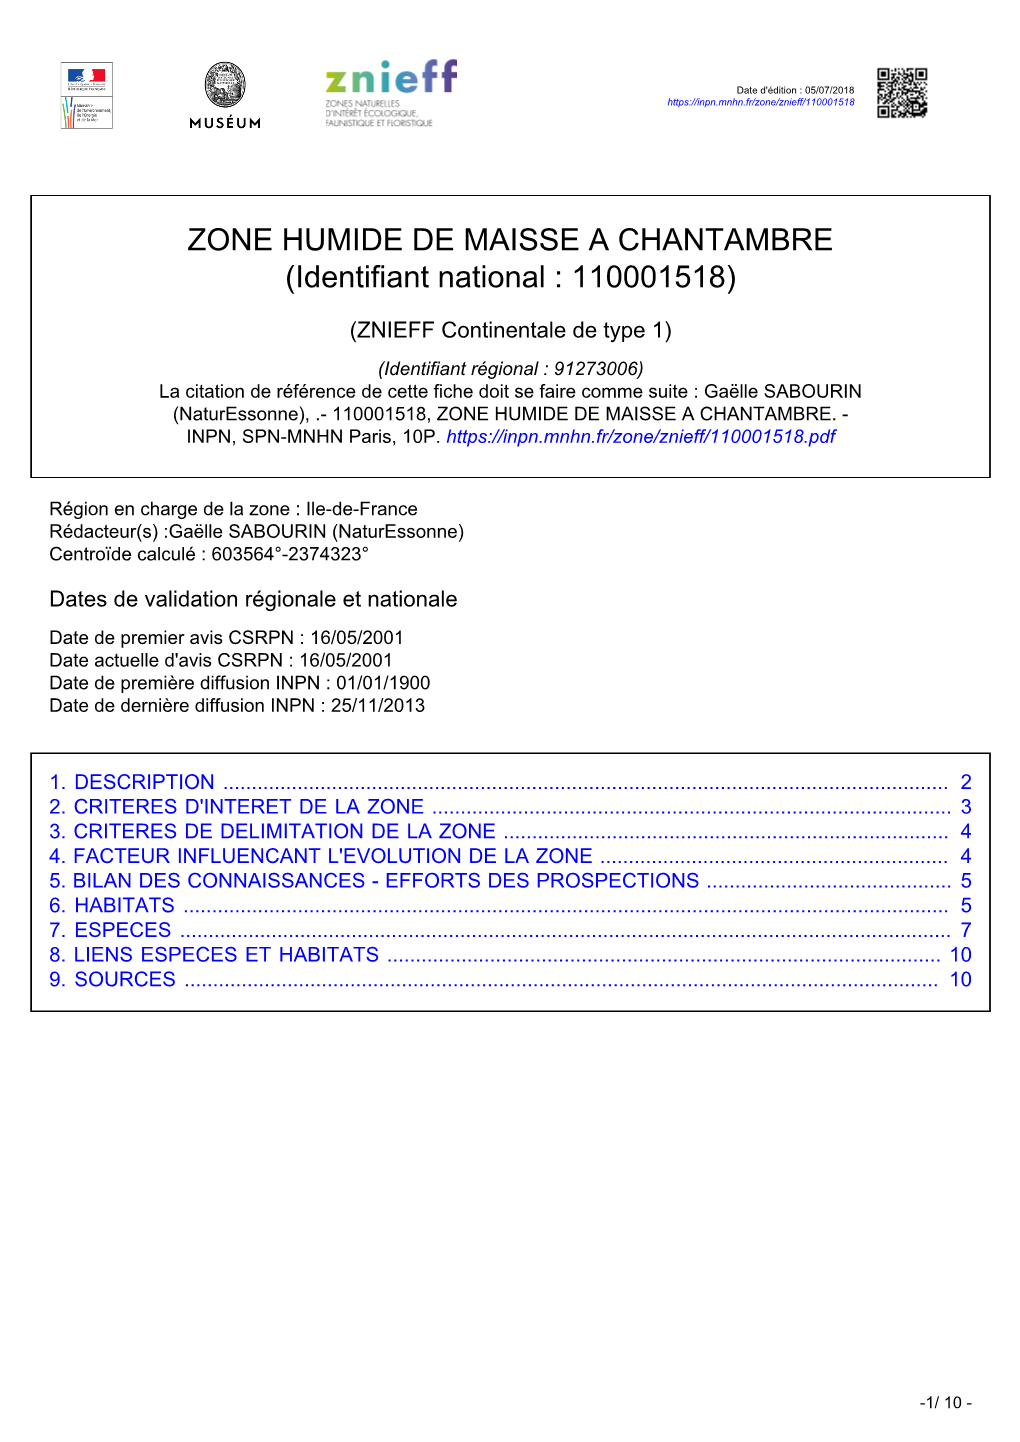 ZONE HUMIDE DE MAISSE a CHANTAMBRE (Identifiant National : 110001518)